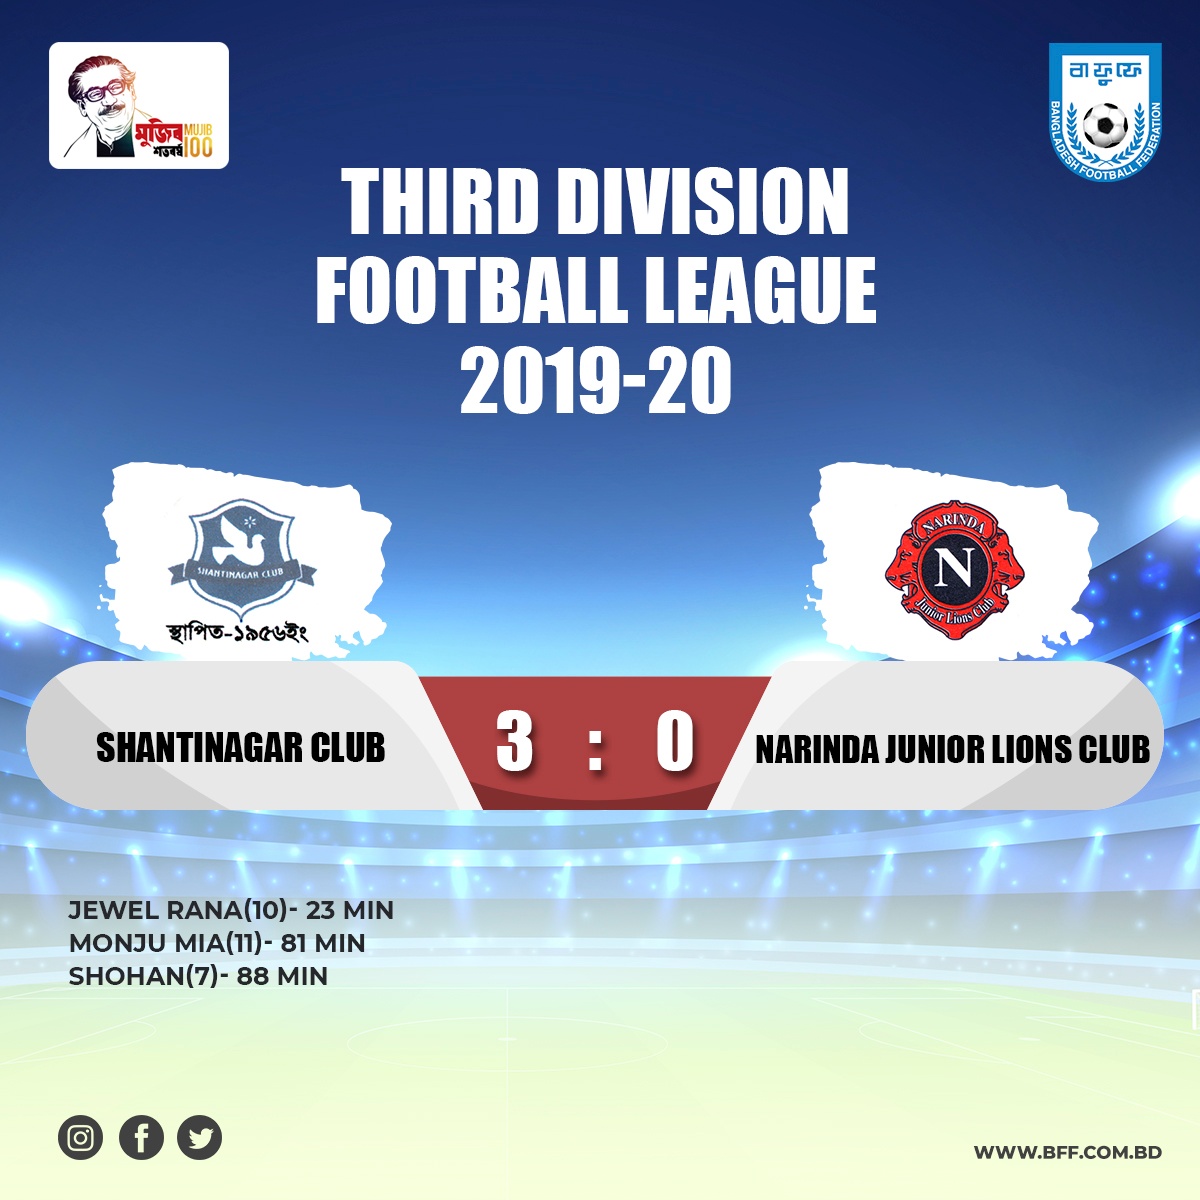 Shantinagar Club defeated Narinda Junior Lions Club by 3-0 goals